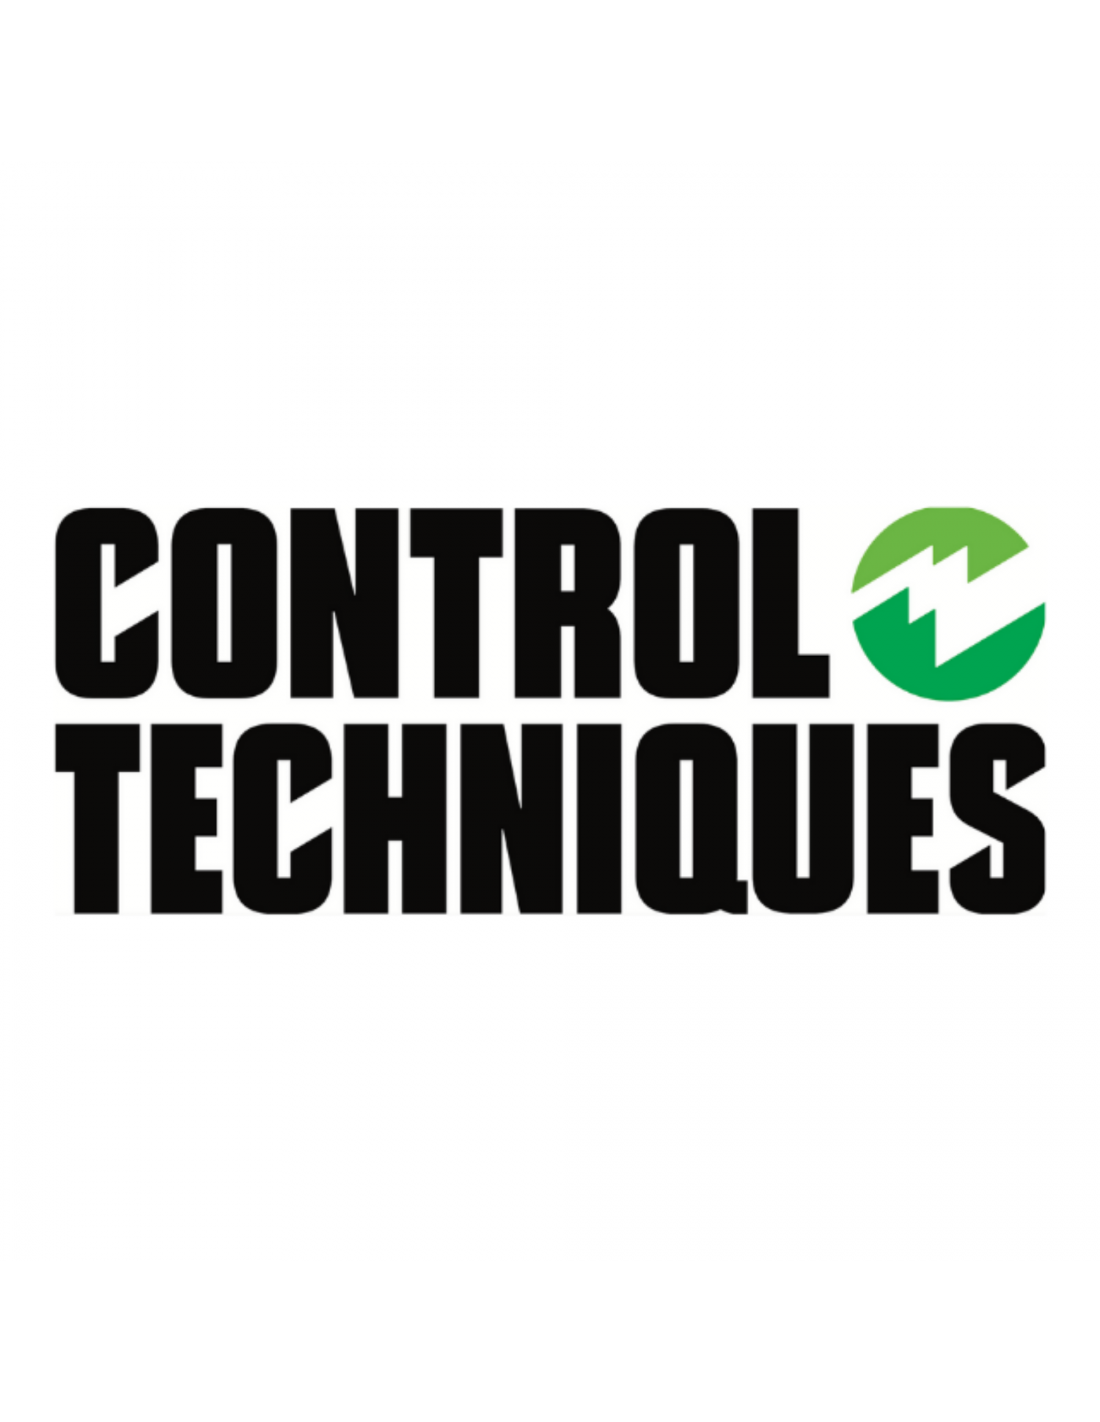 Company controllers. Control techniques. Control techniques logo. Control Technics. Nidec Control techniques.